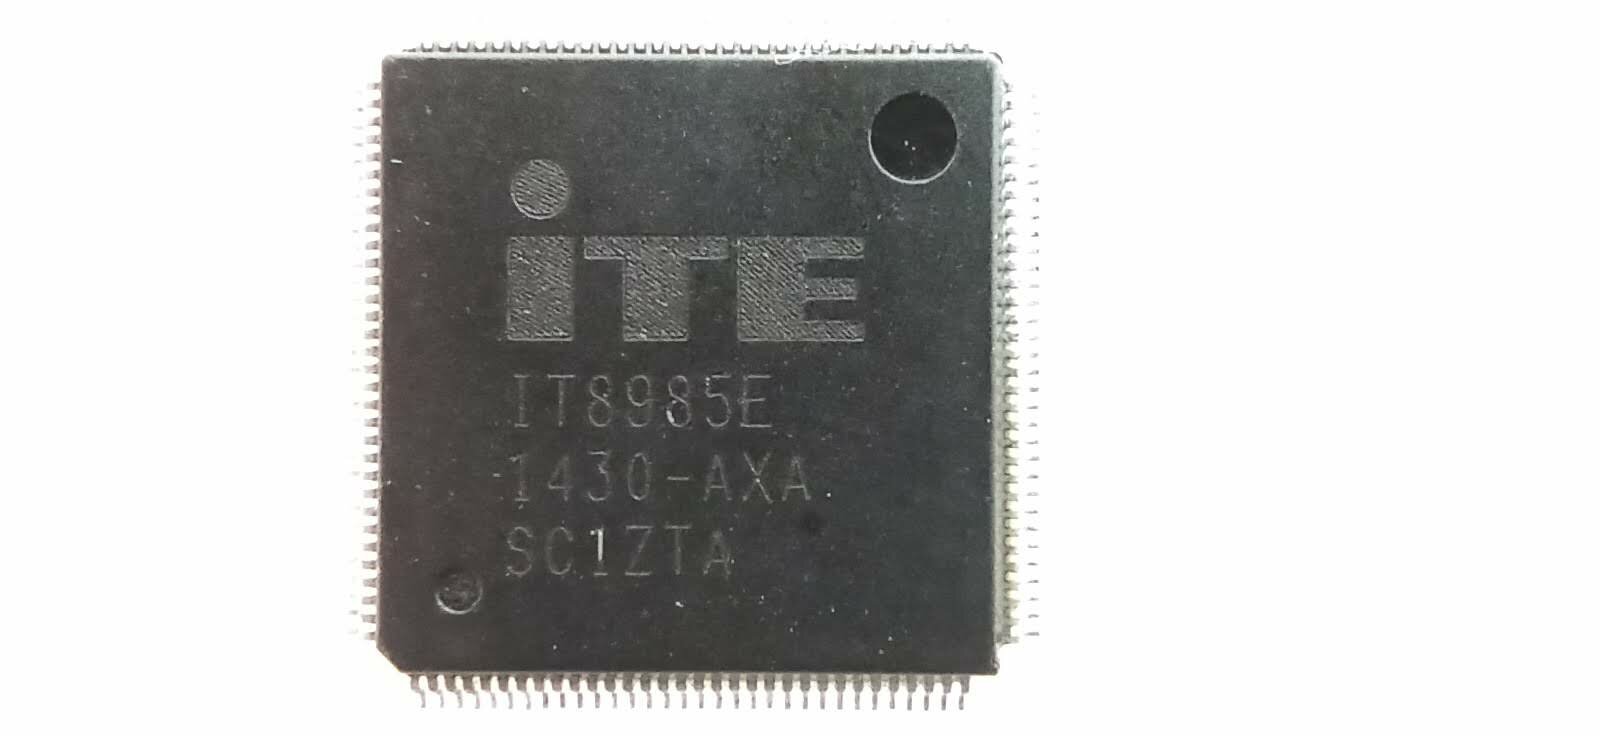 Мультиконтроллер - ITE - IT8985E AXA